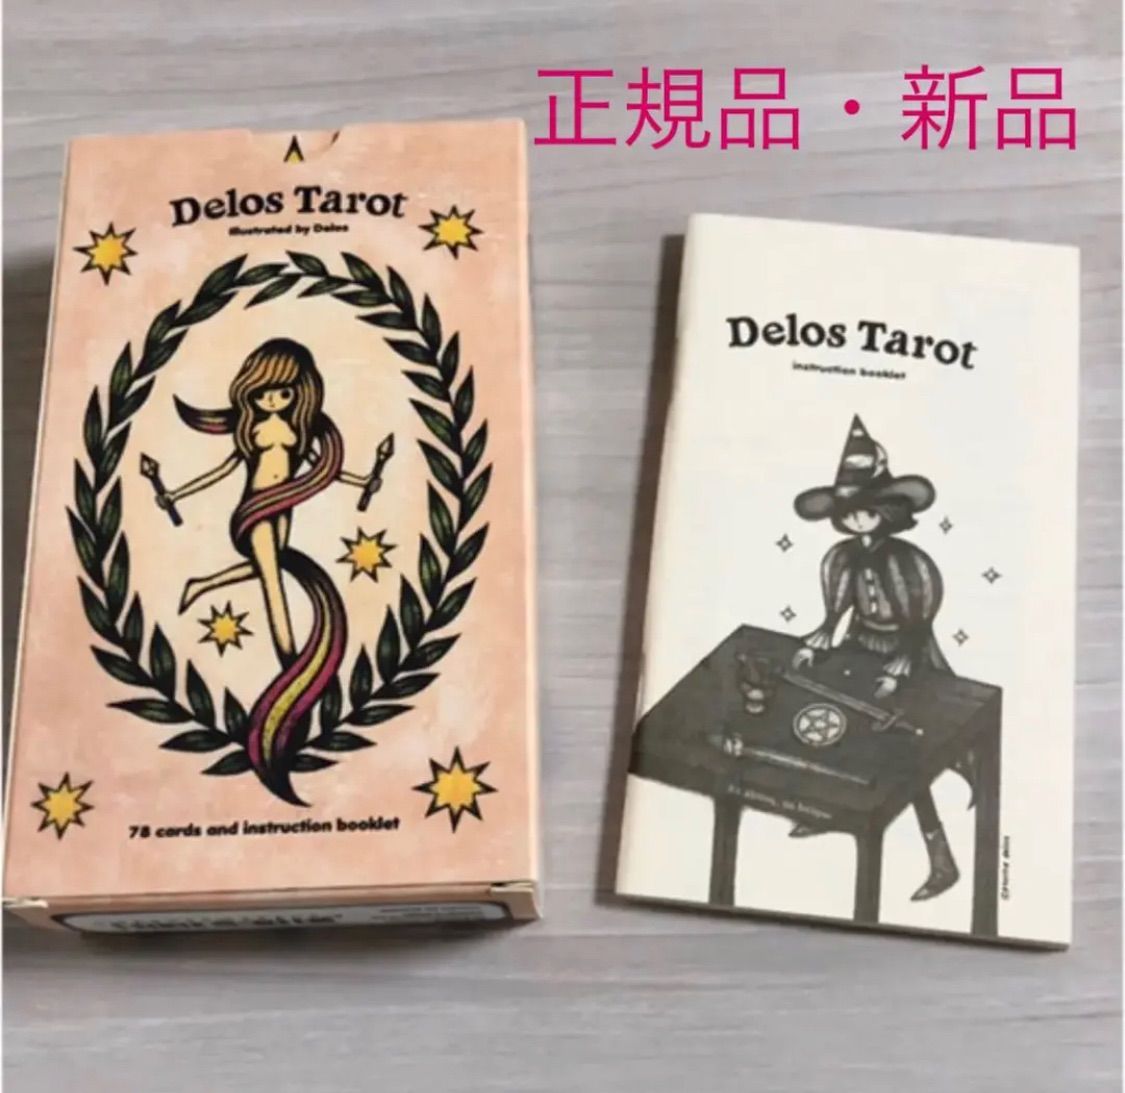 Delos tarot 1st edition 正規品✨入手困難 - メルカリ